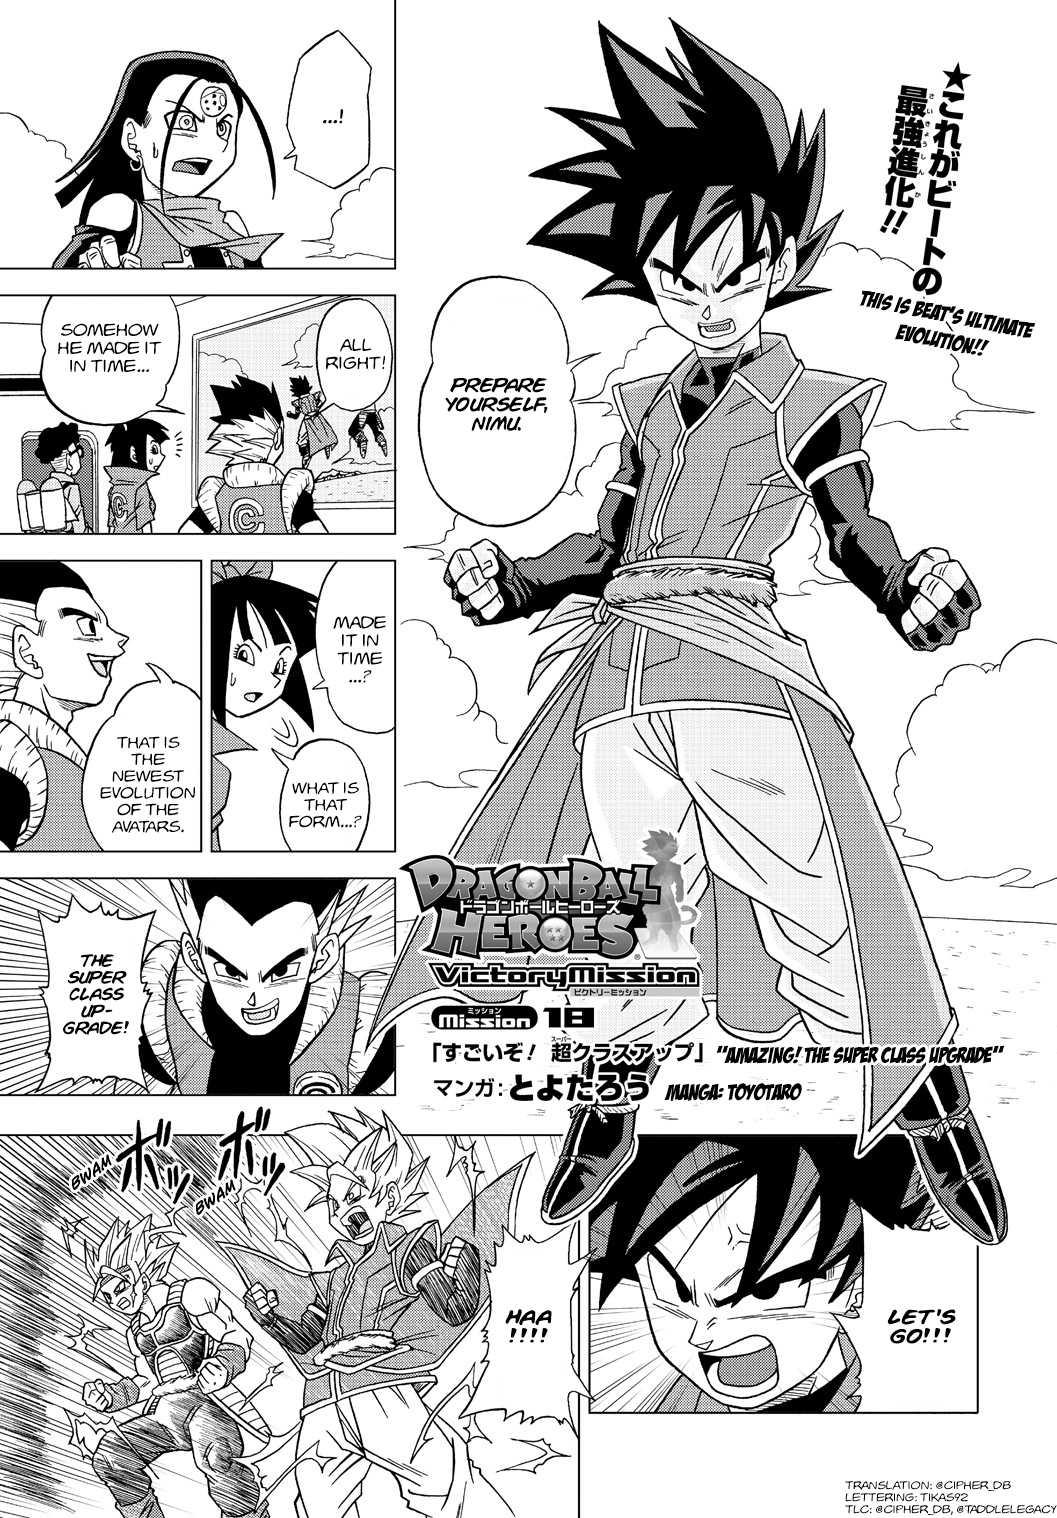 Dragon Ball Heroes: Victory Mission Manga